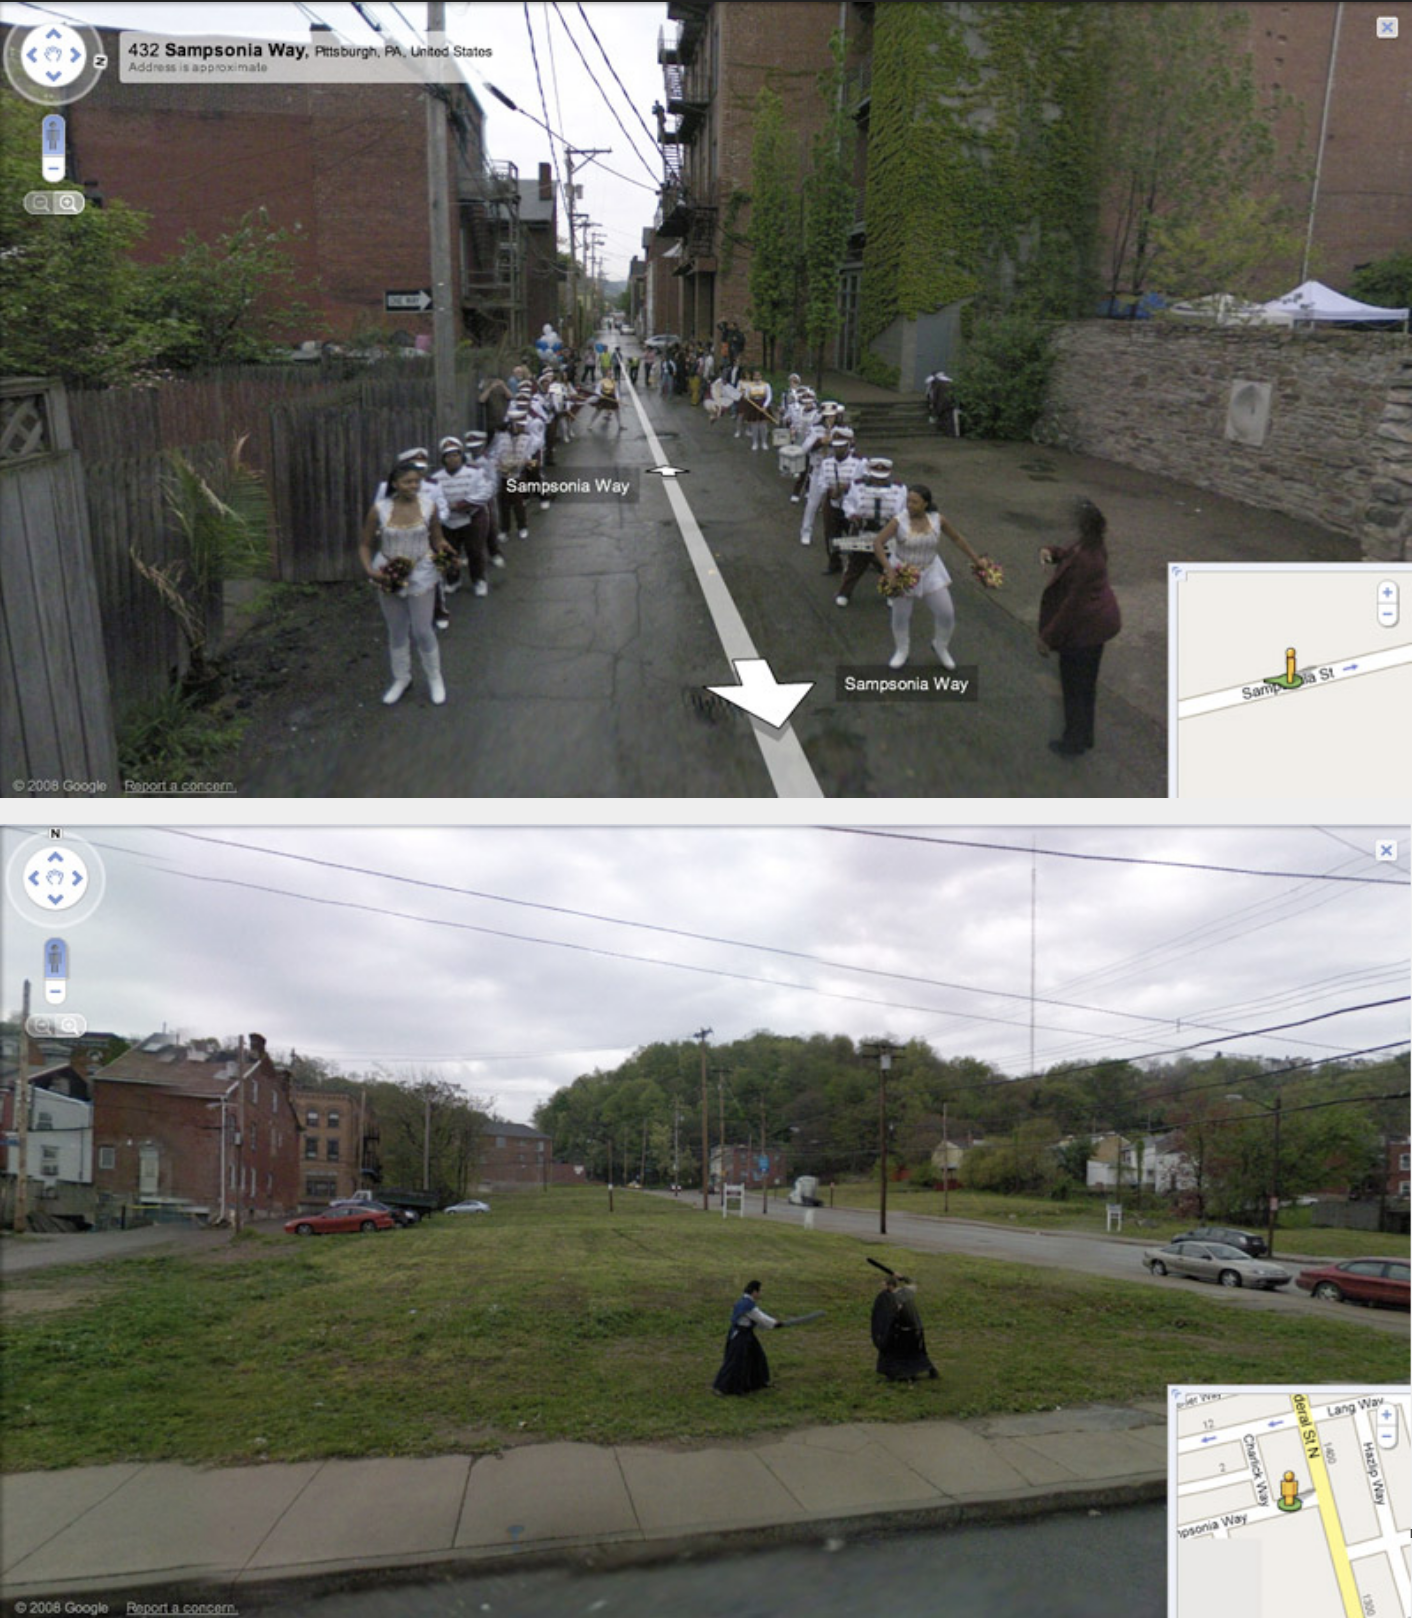 Google street view photos